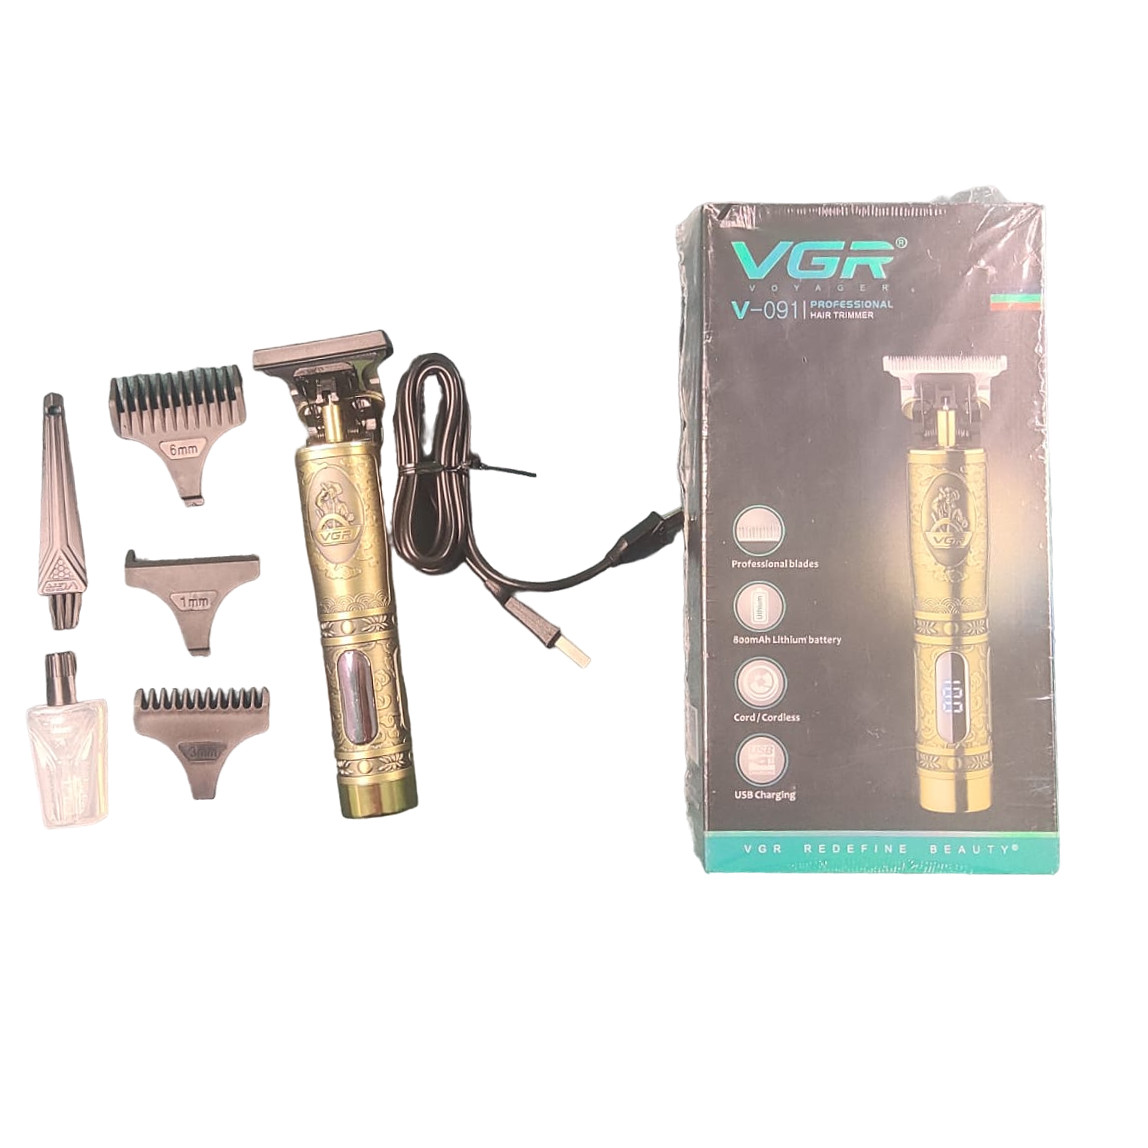 VGR V-091| Professional Hair Trimmer |Professional blades| 800mAh battery |USB charging